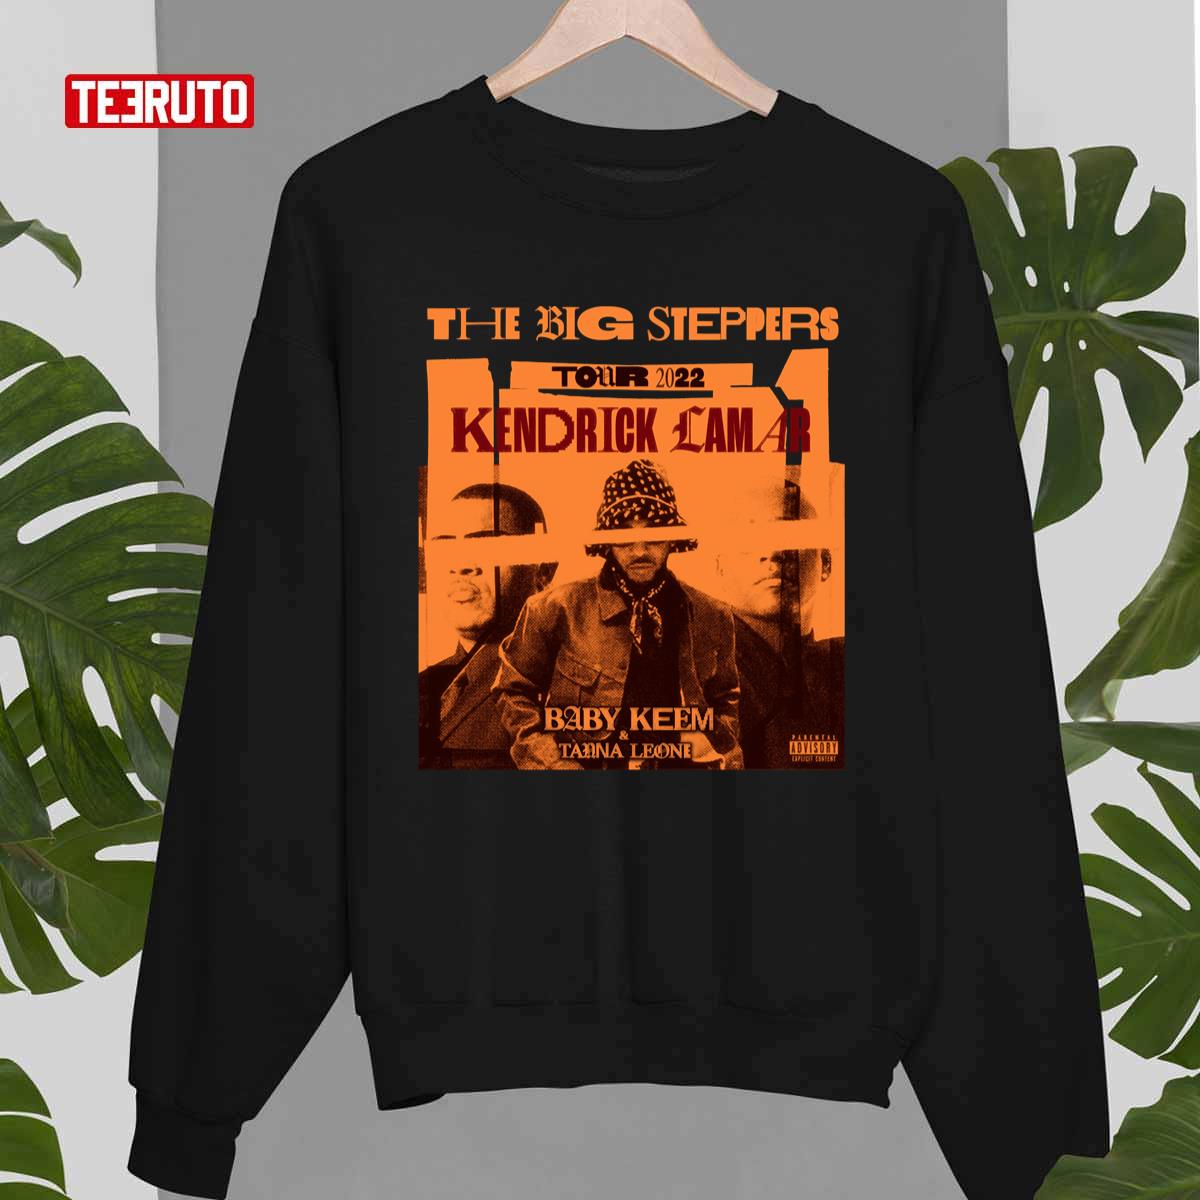 The Big Steppers Tour Okalama 2022 T-Shirt, Kendrick Lamar Tour shirt, Mr  Morale